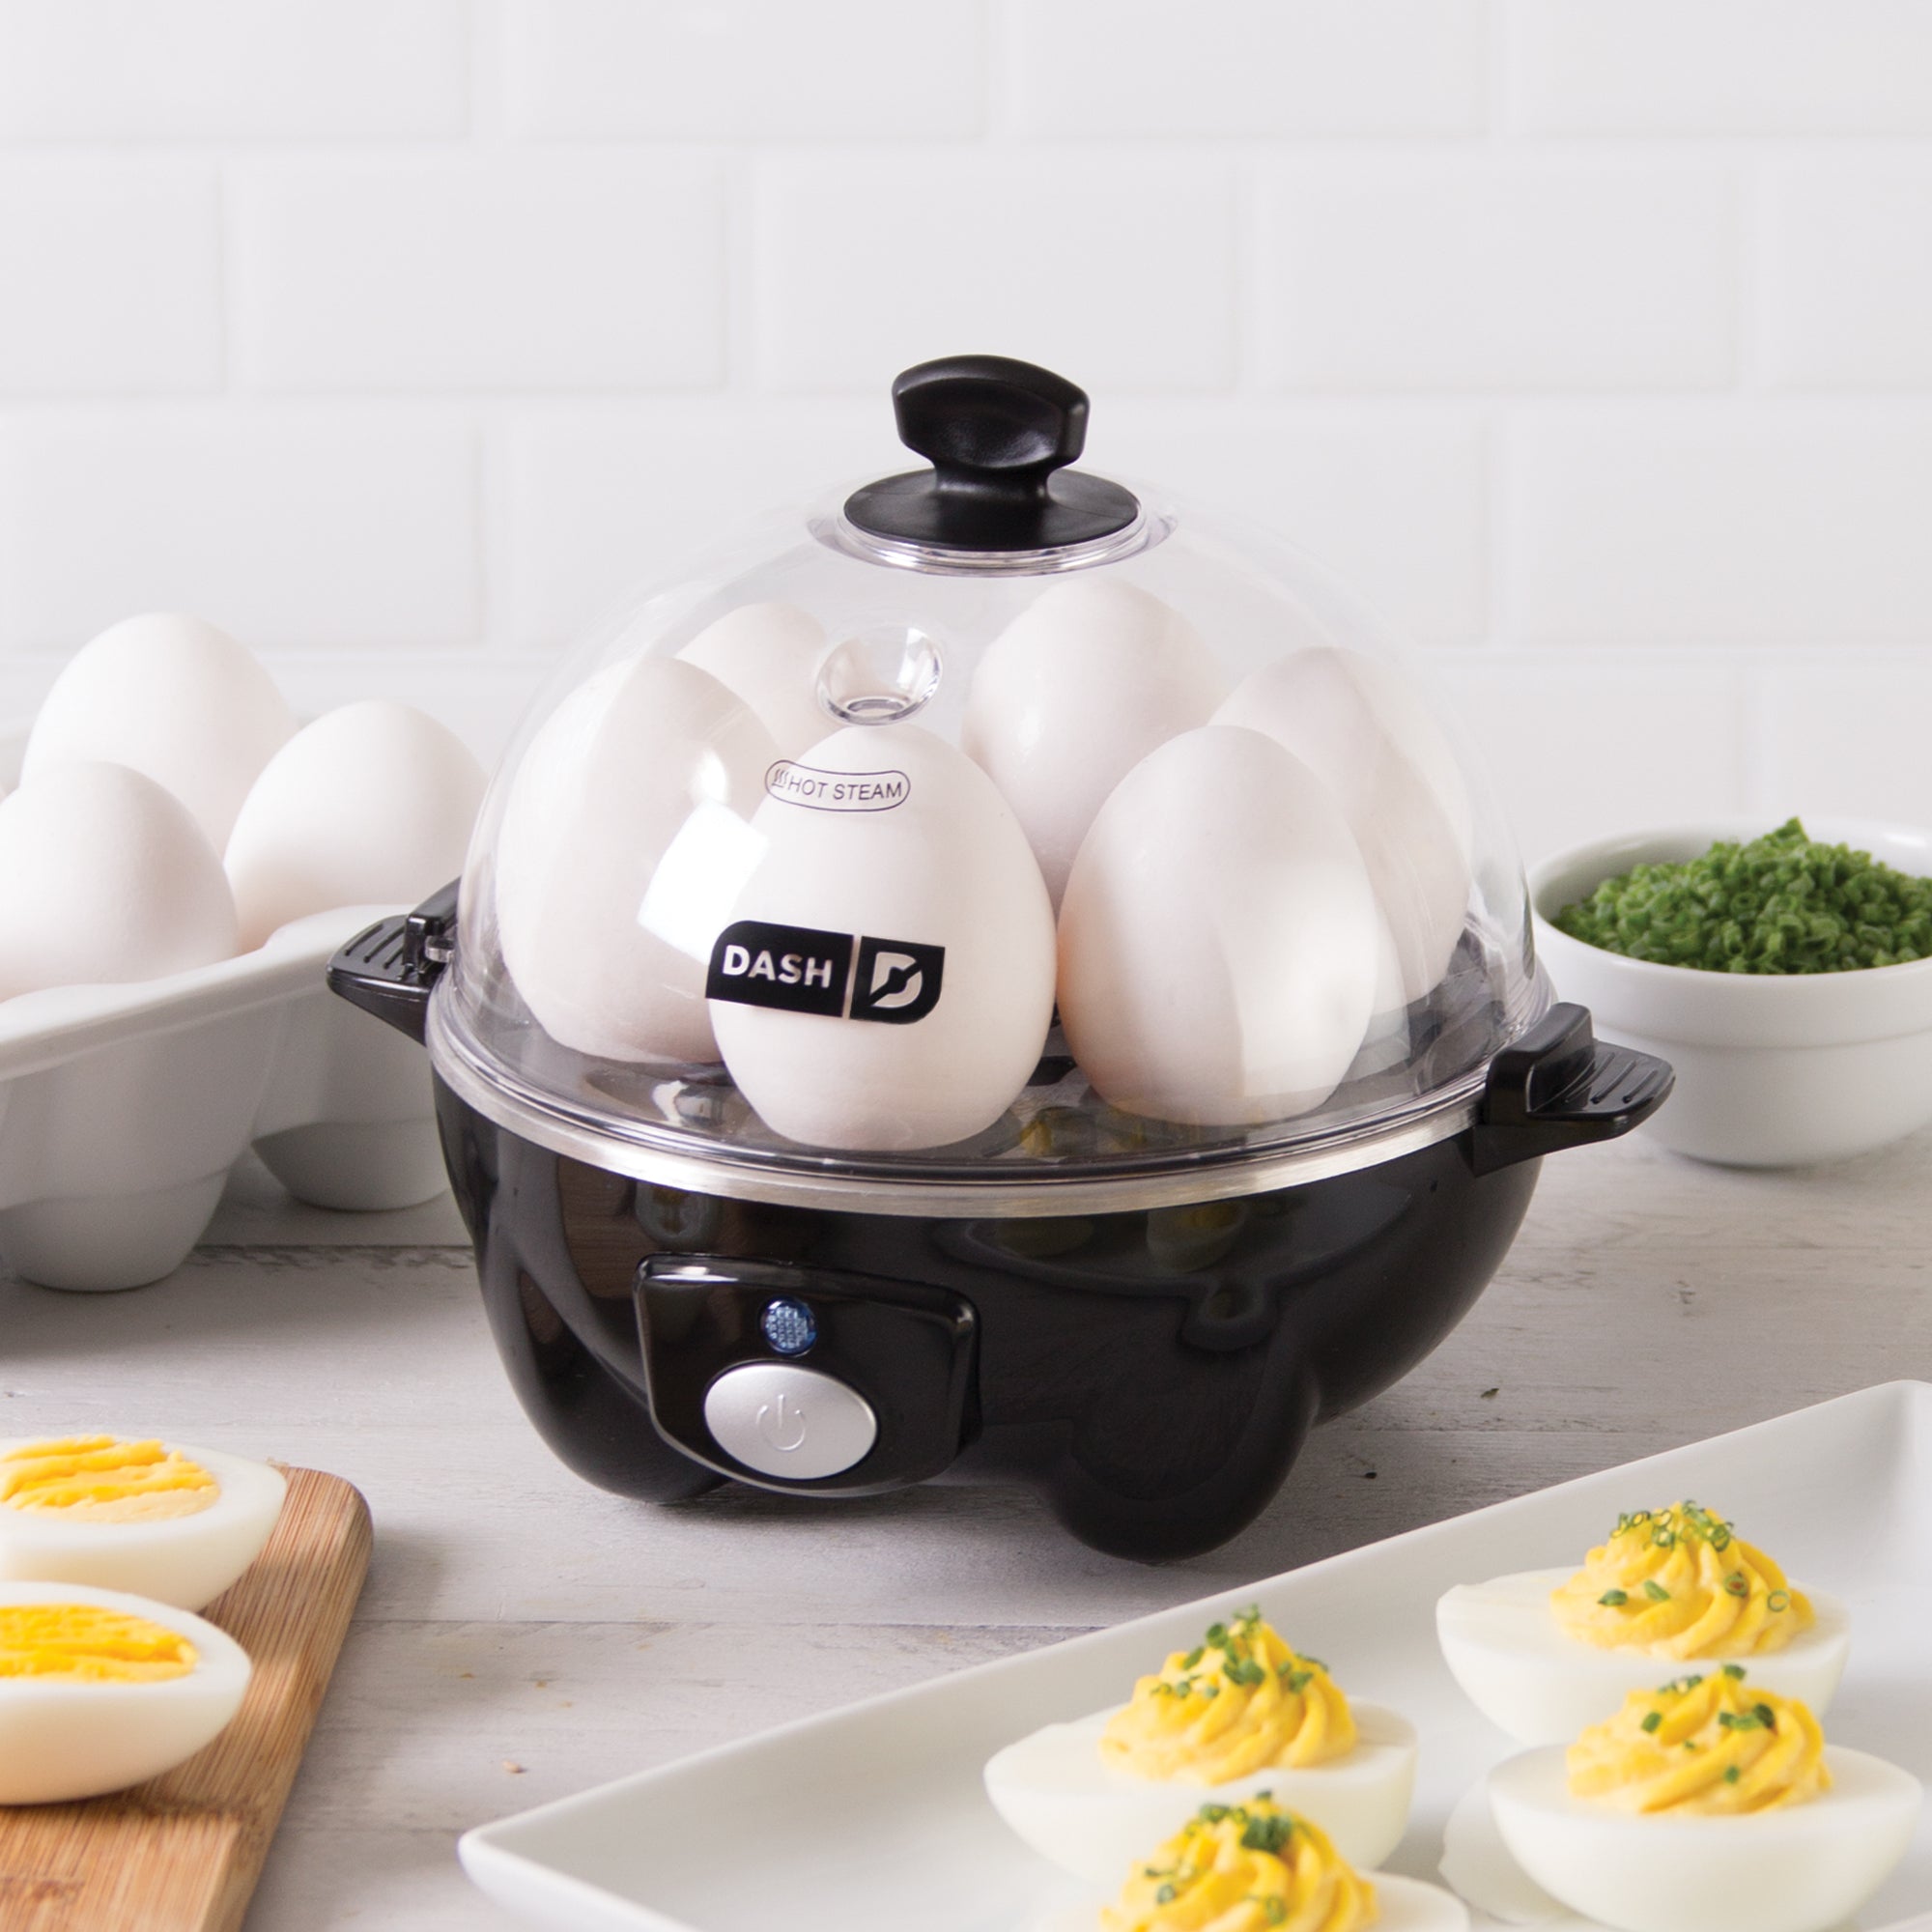 Dash Rapid Egg Cooker Electric, Black - Auto Shut Off Feature